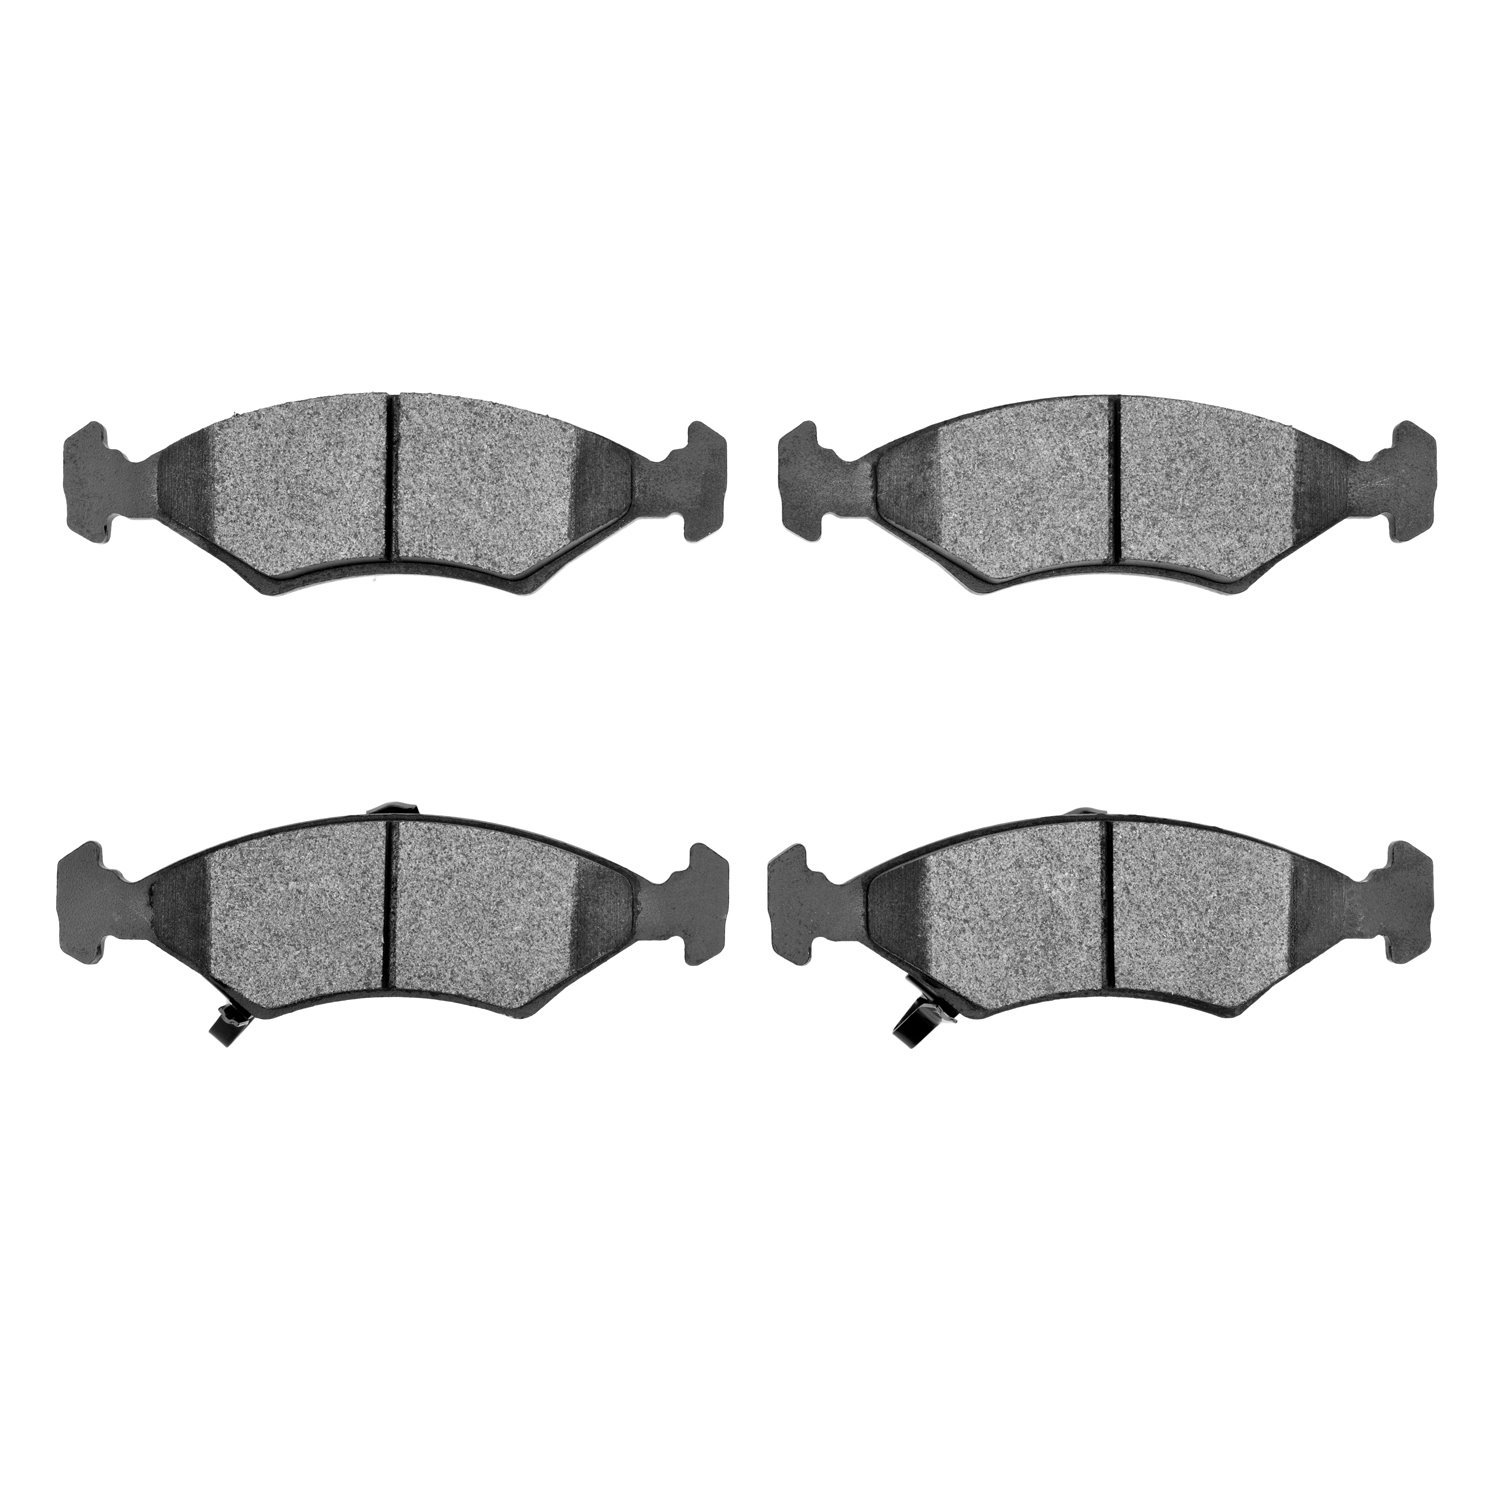 Ceramic Brake Pads, 1982-2000 Fits Multiple Makes/Models, Position: Front & Rear